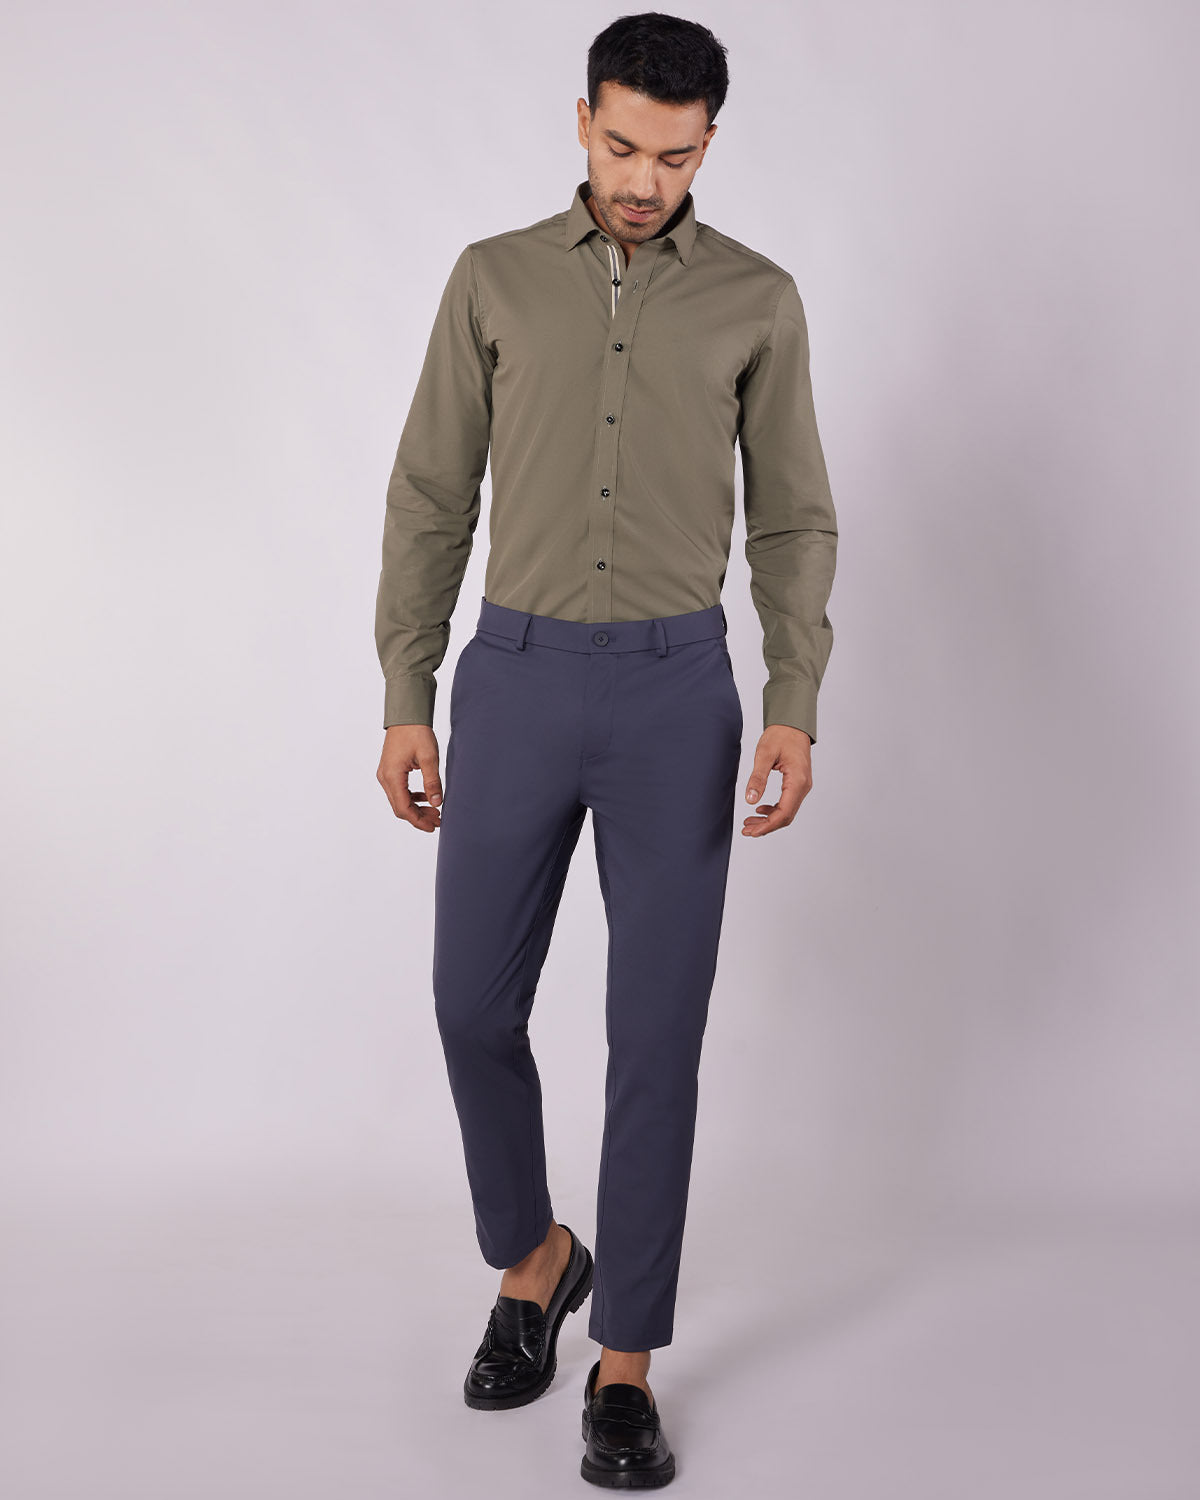 Purple Shirt Matching Pant || Purple Shirt Combination Pants - TiptopGents  | Mens smart casual outfits, Grey pants men, Mens casual dress outfits